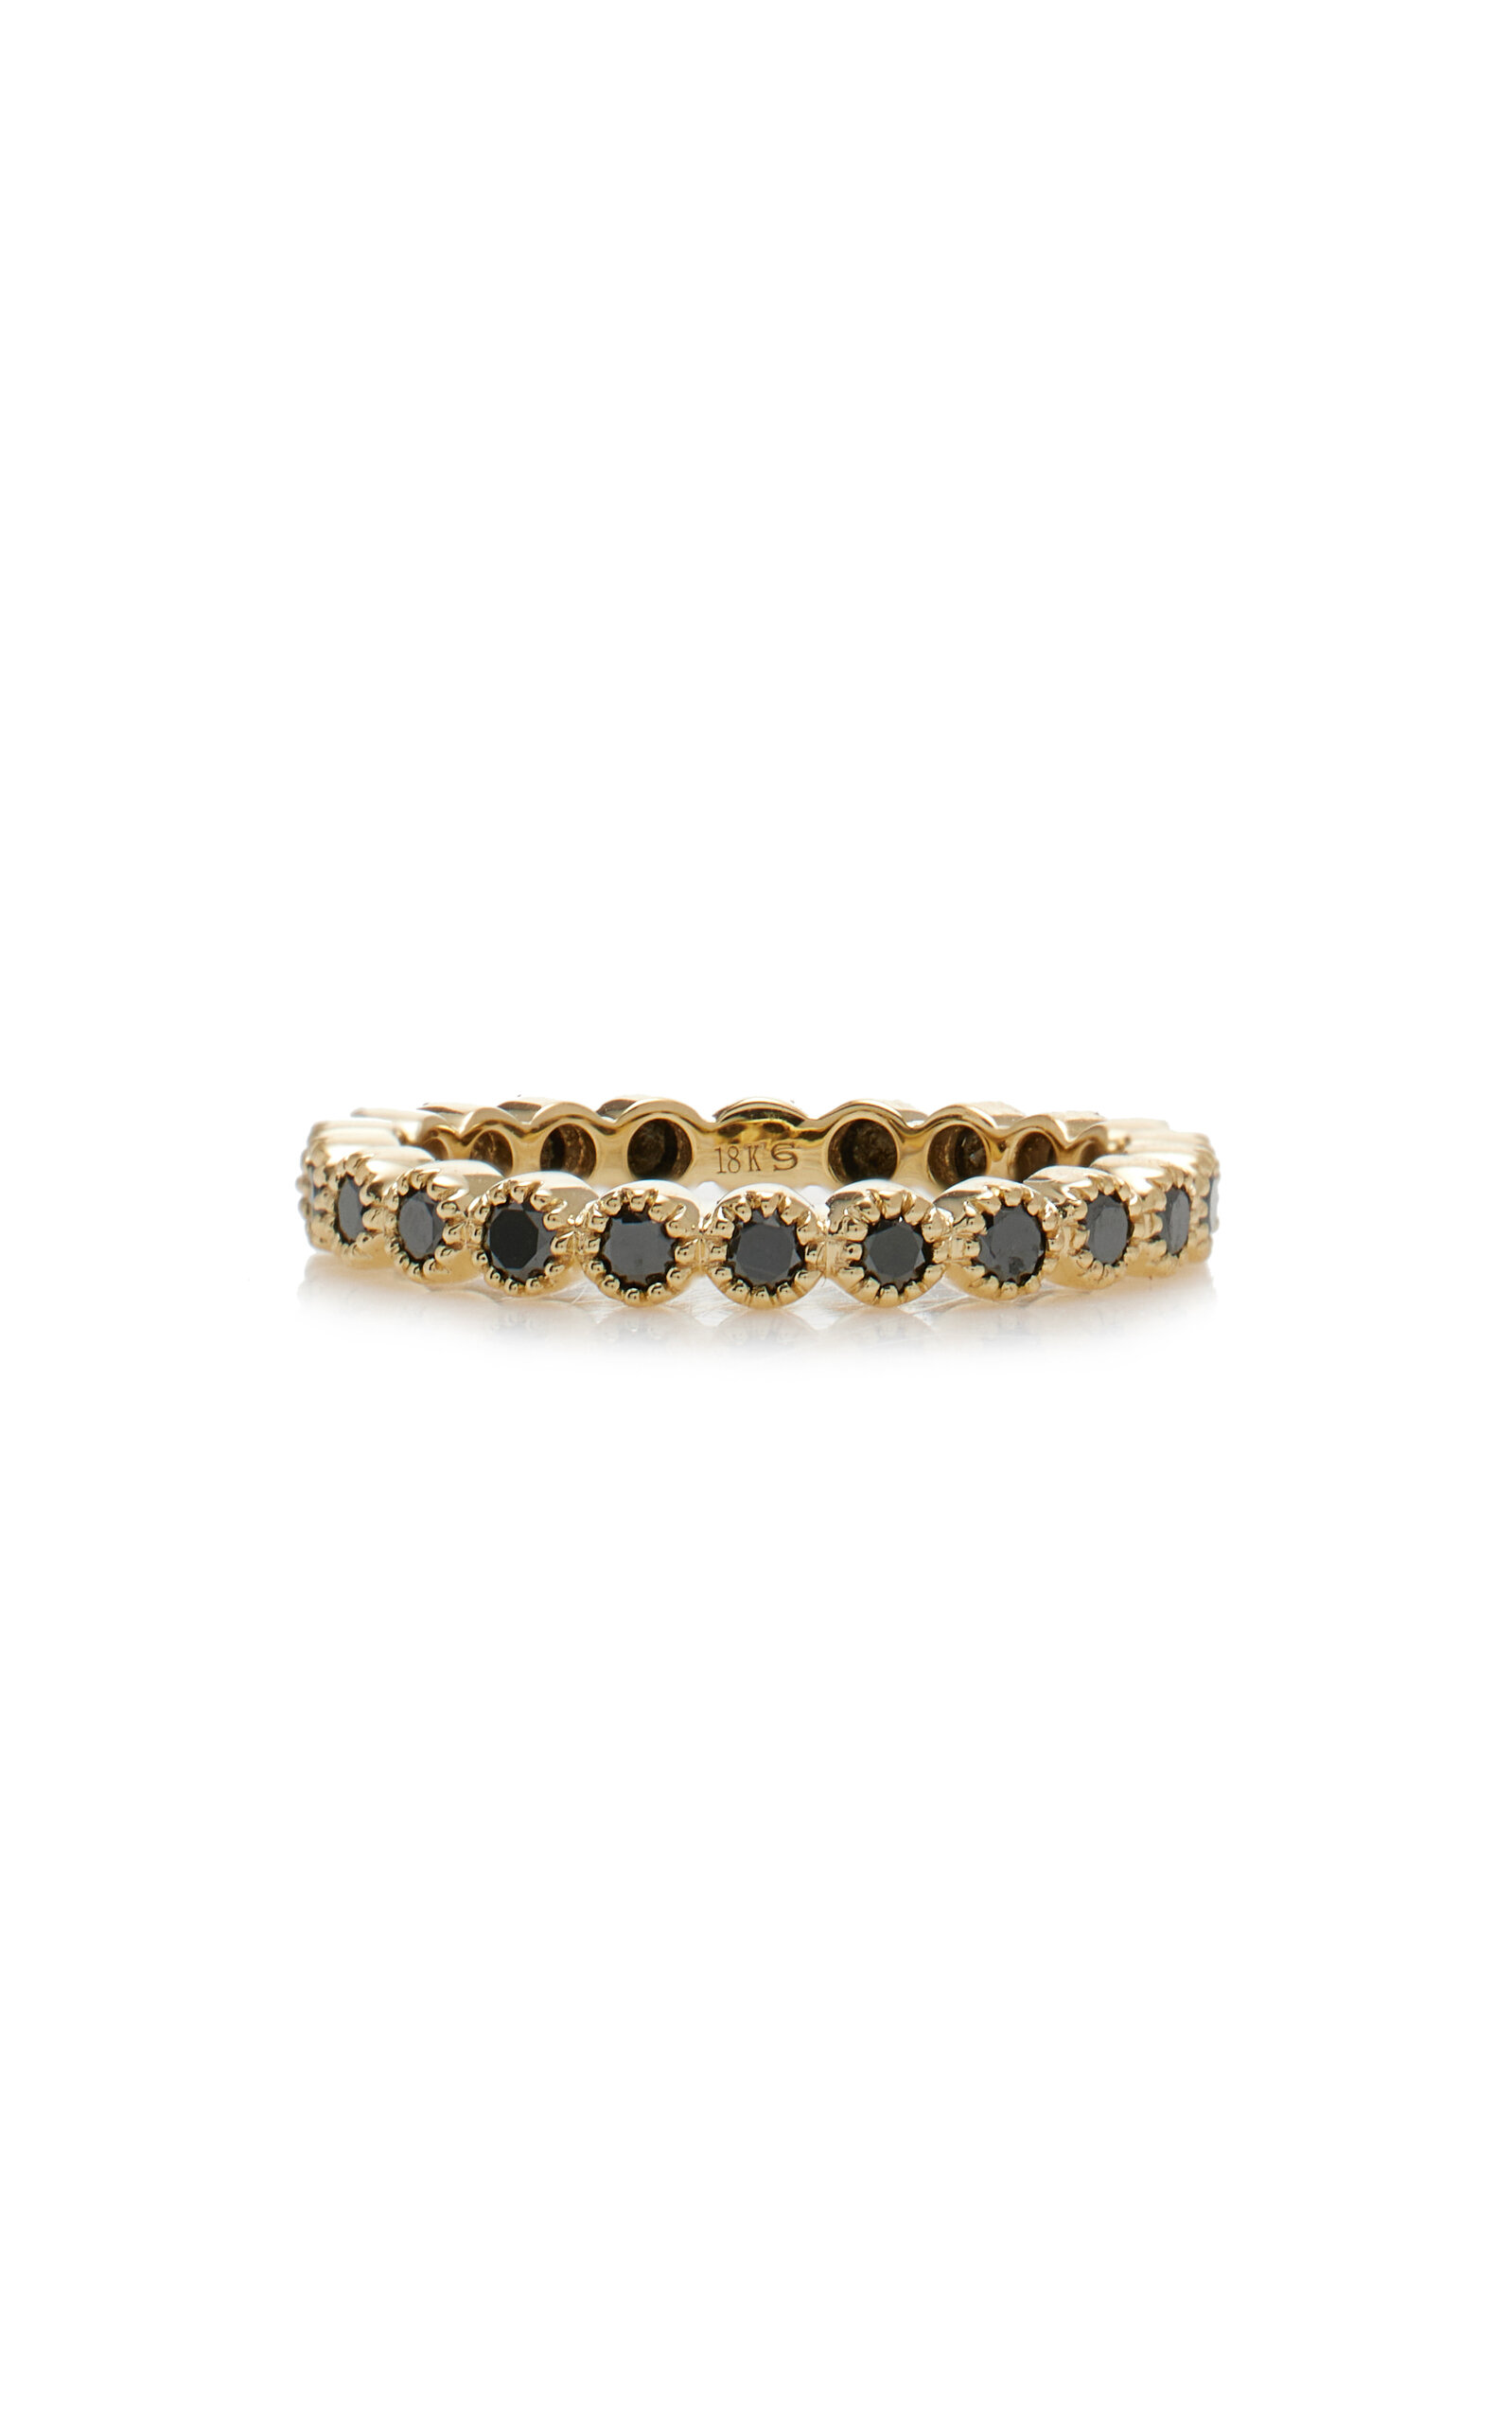 The Bezel 18K Yellow Gold and Black Diamond Ring